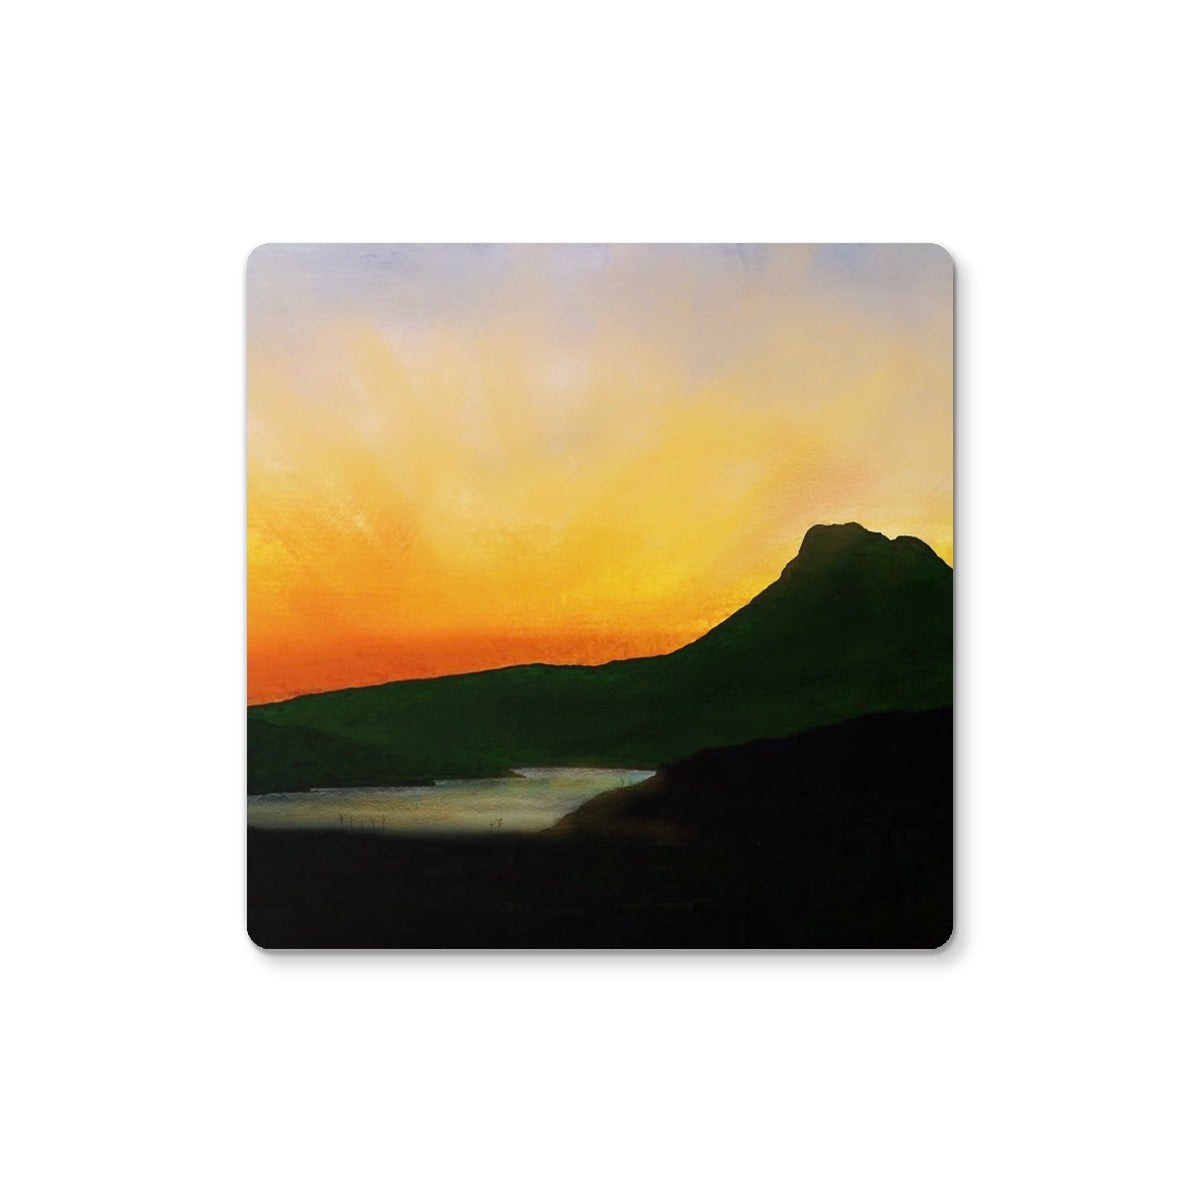 Stac Pollaidh Dusk Art Gifts Coaster-Homeware-Scottish Lochs & Mountains Art Gallery-Single Coaster-Paintings, Prints, Homeware, Art Gifts From Scotland By Scottish Artist Kevin Hunter